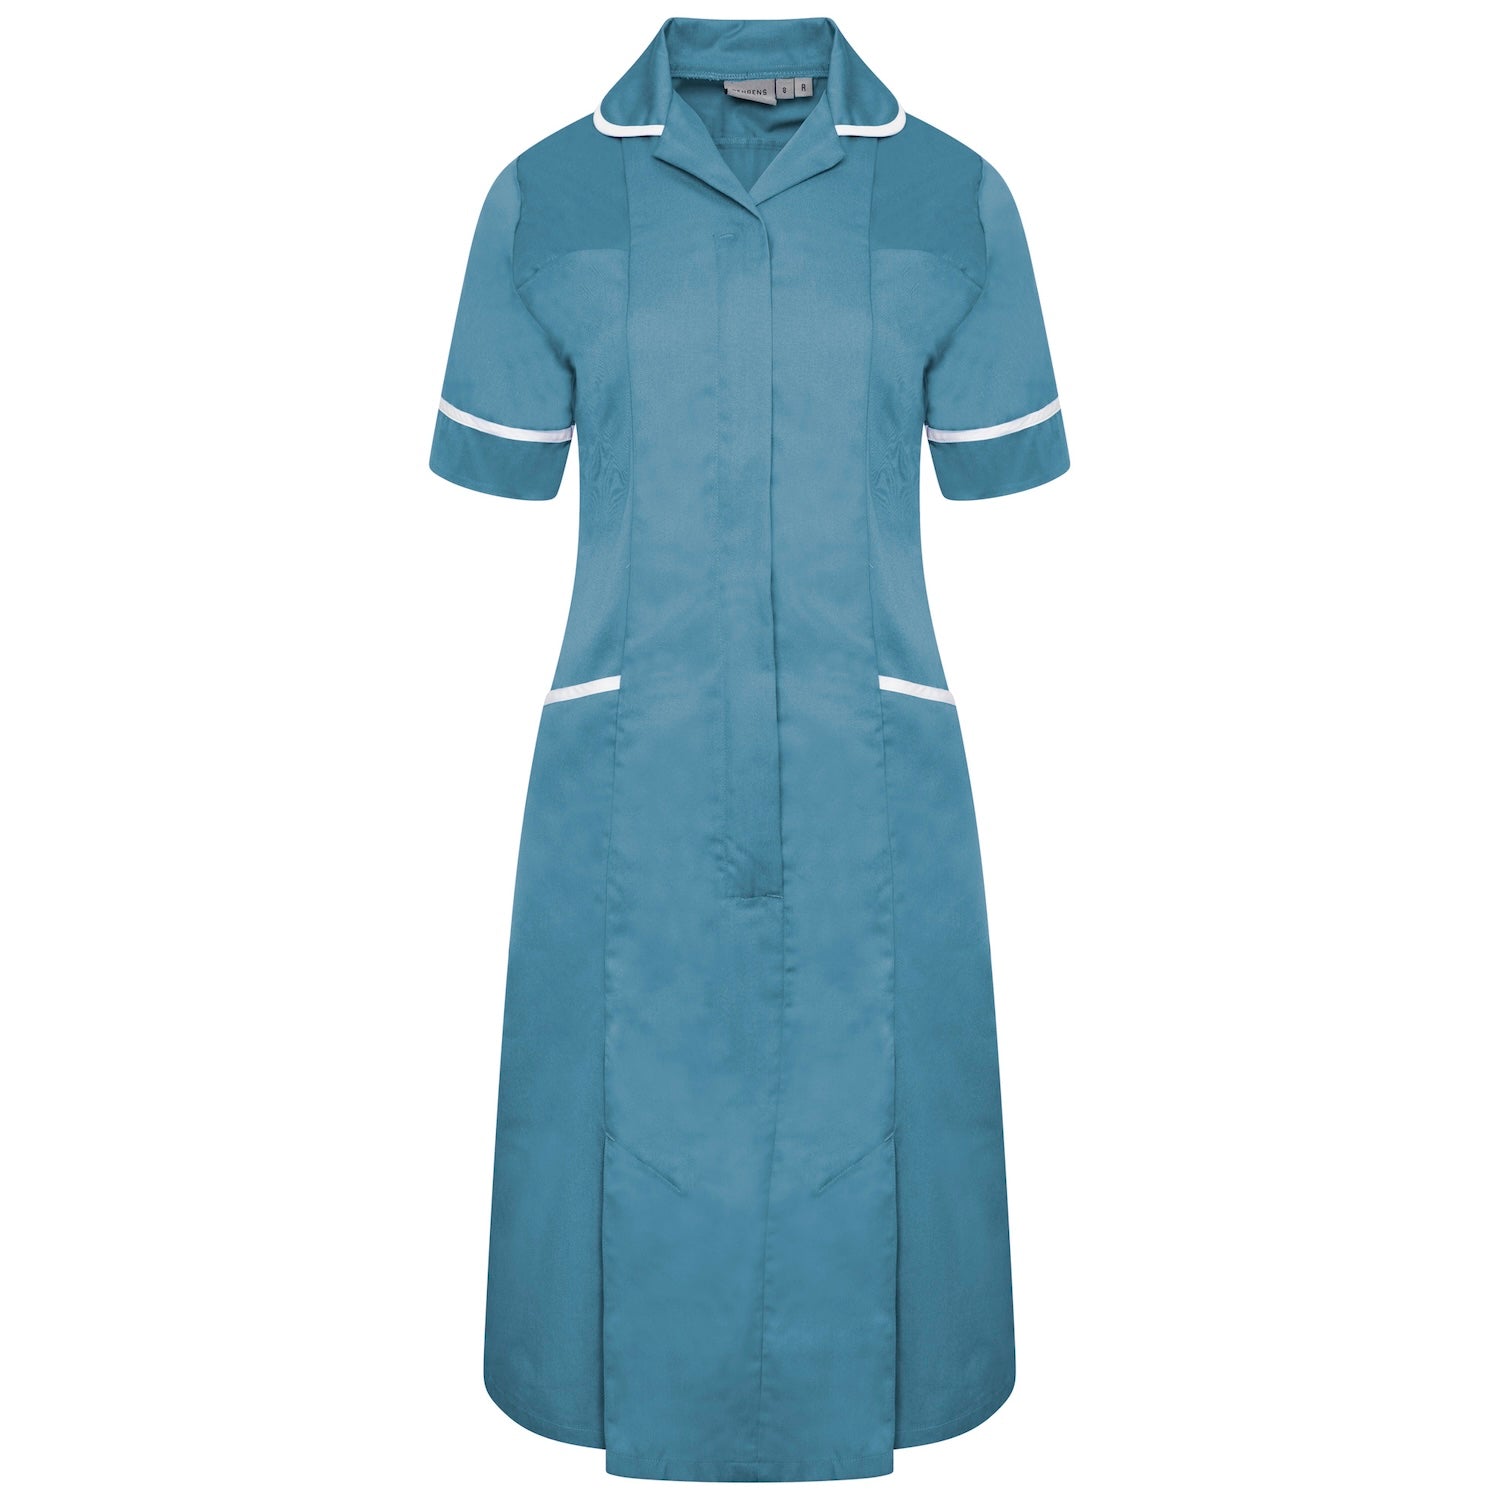 Ladies Healthcare Dress | Round Collar | Teal/White Trim